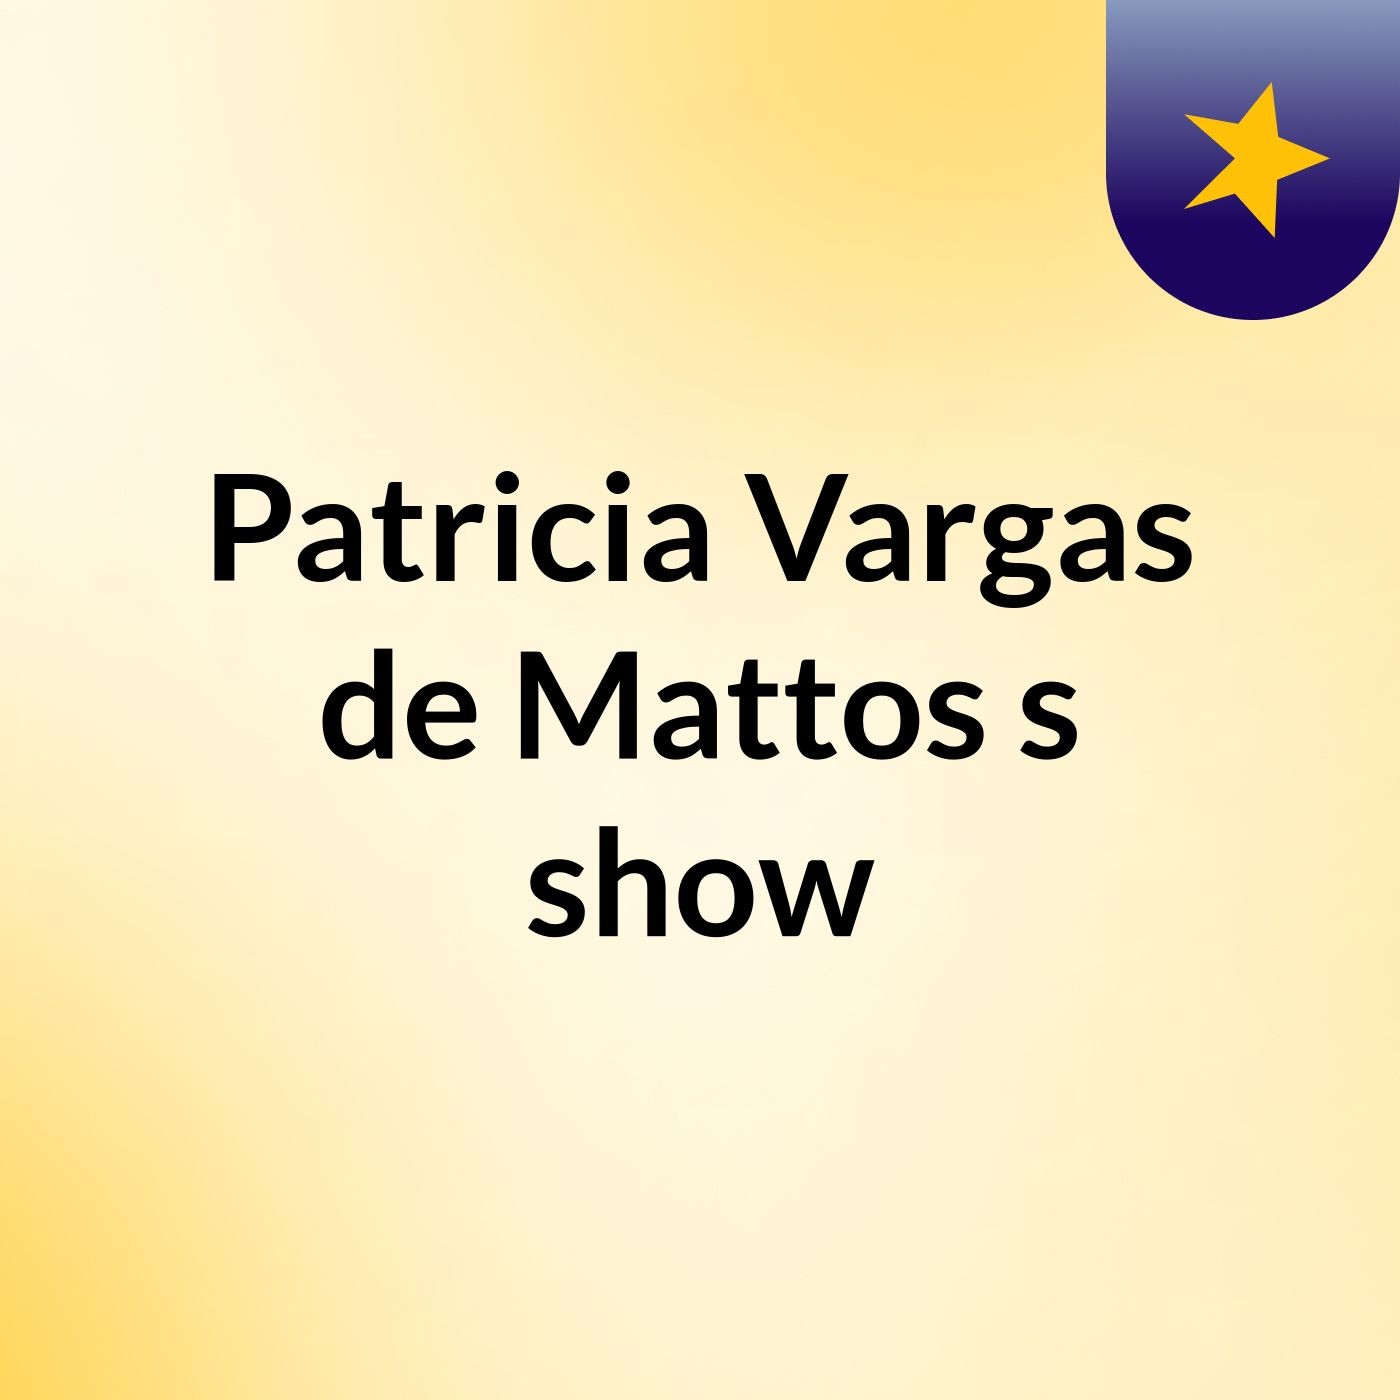 Patricia Vargas de Mattos's show